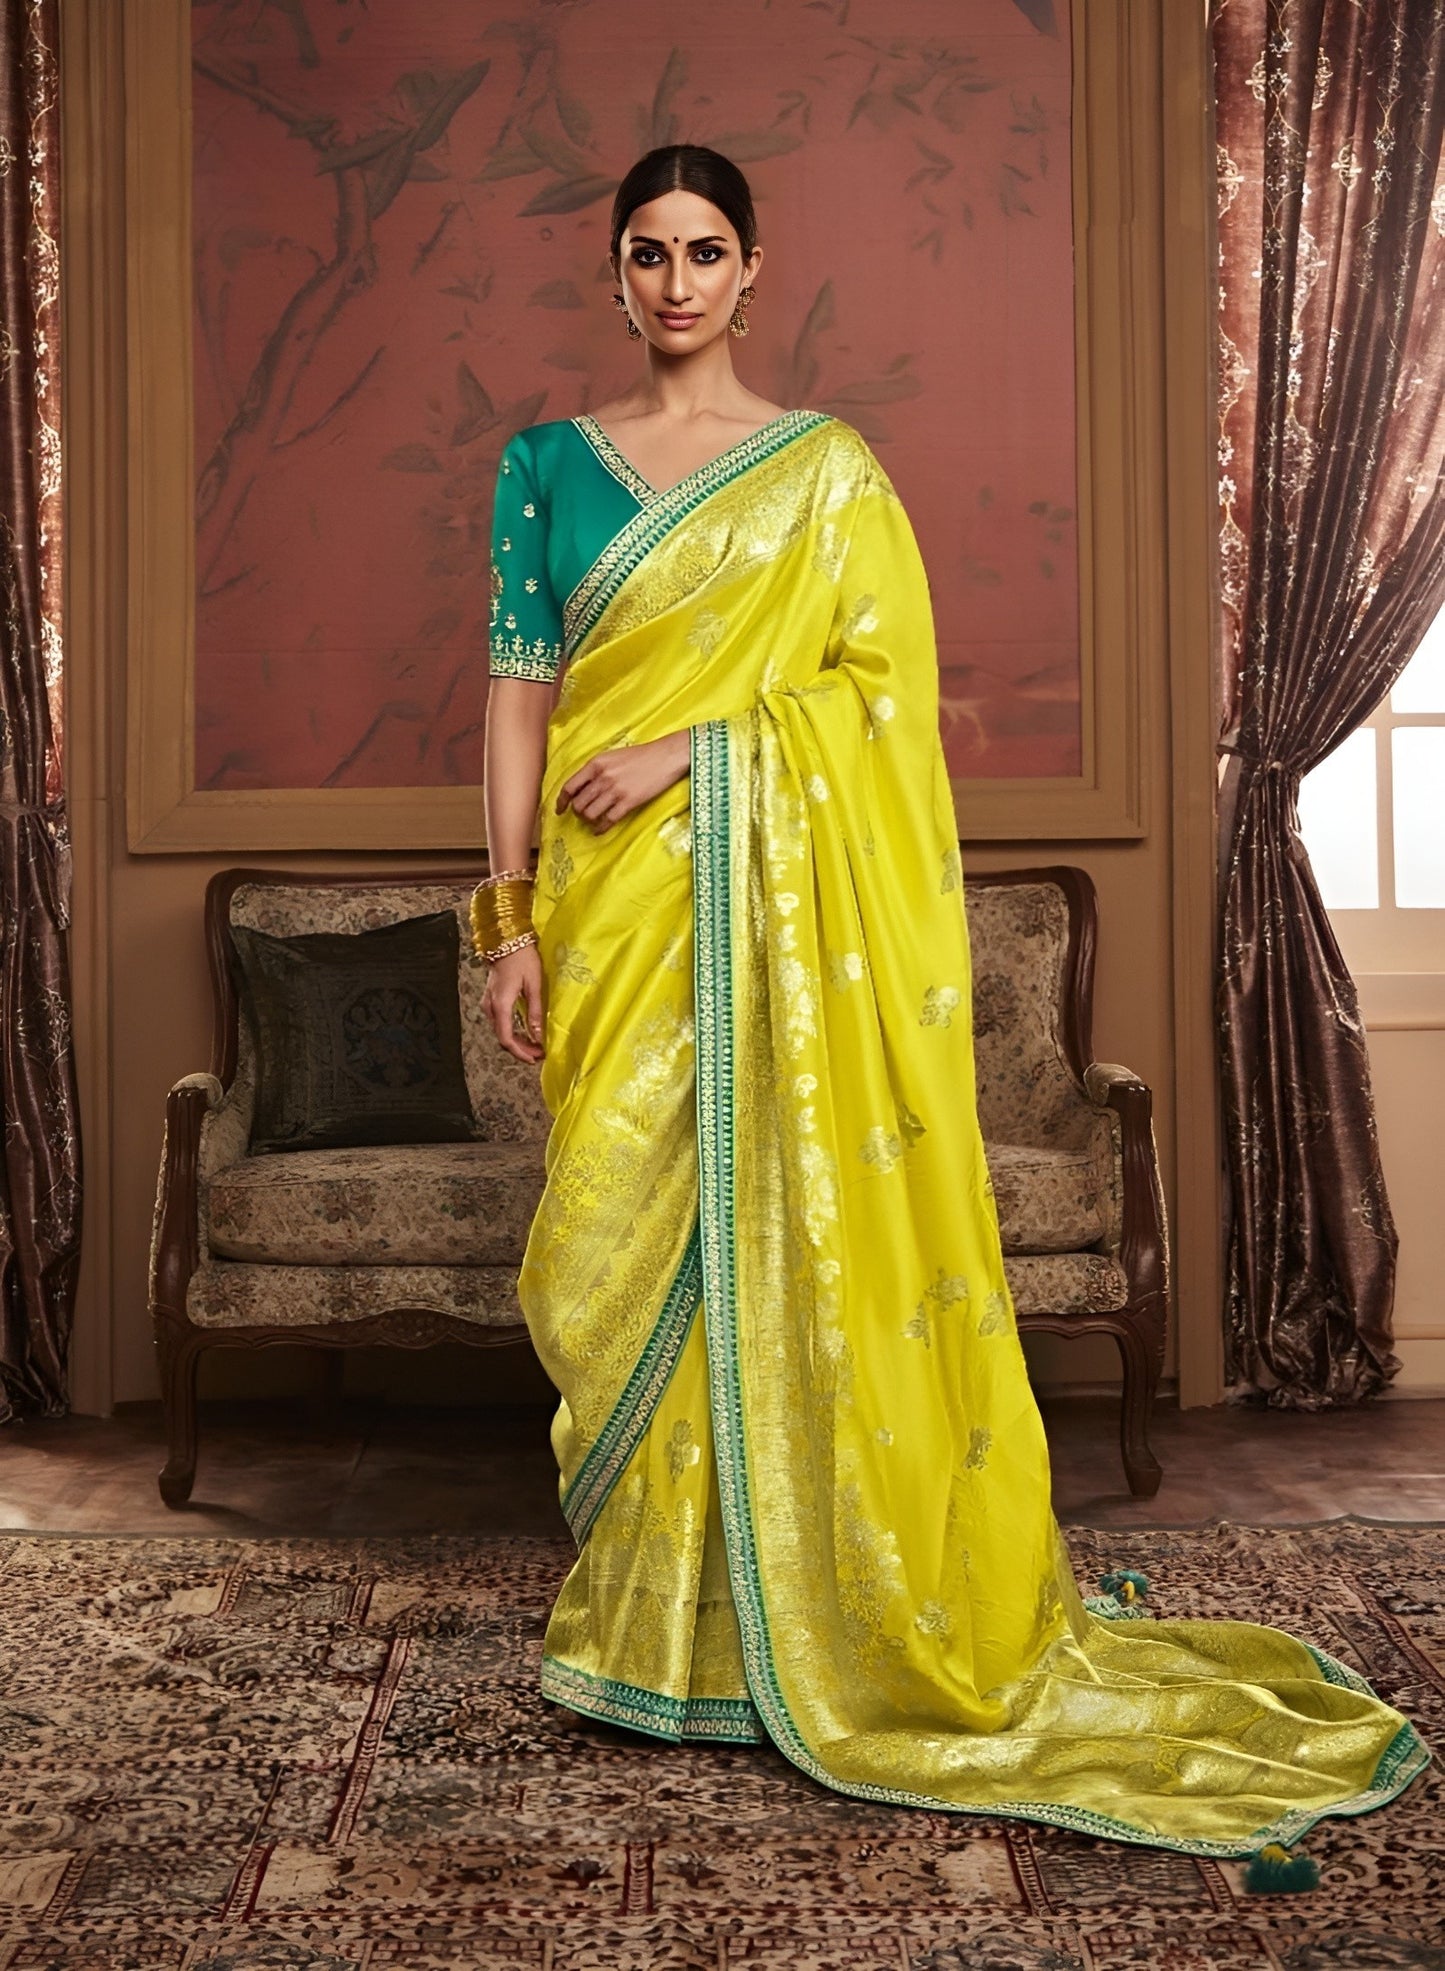 EKKTARA Saree For Women Lime Yellow Colour Dola Silk Saree With Embroidery Work Unstitched Blouse